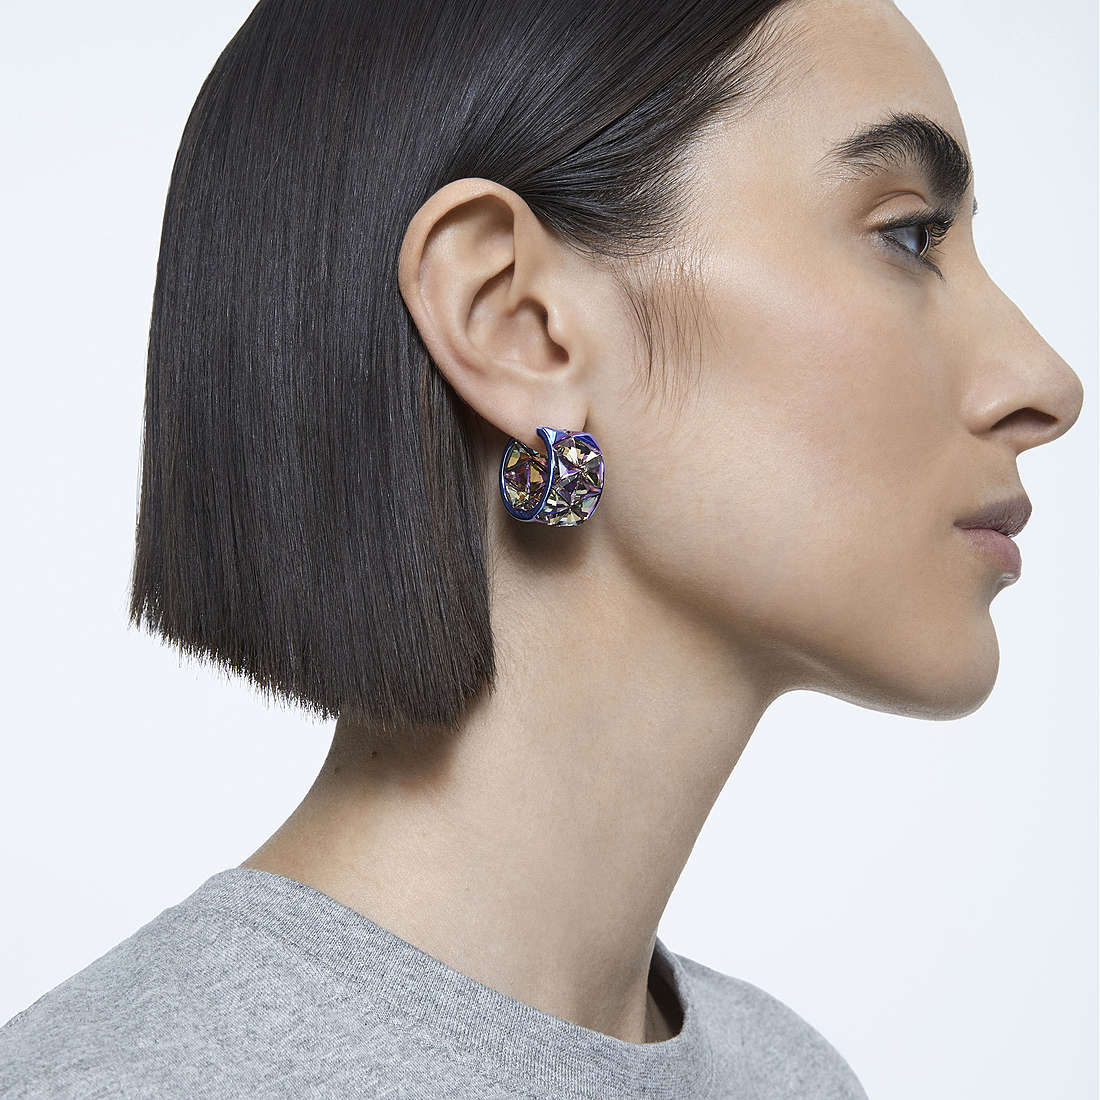 Swarovski earrings Curiosa woman 5599877 wearing